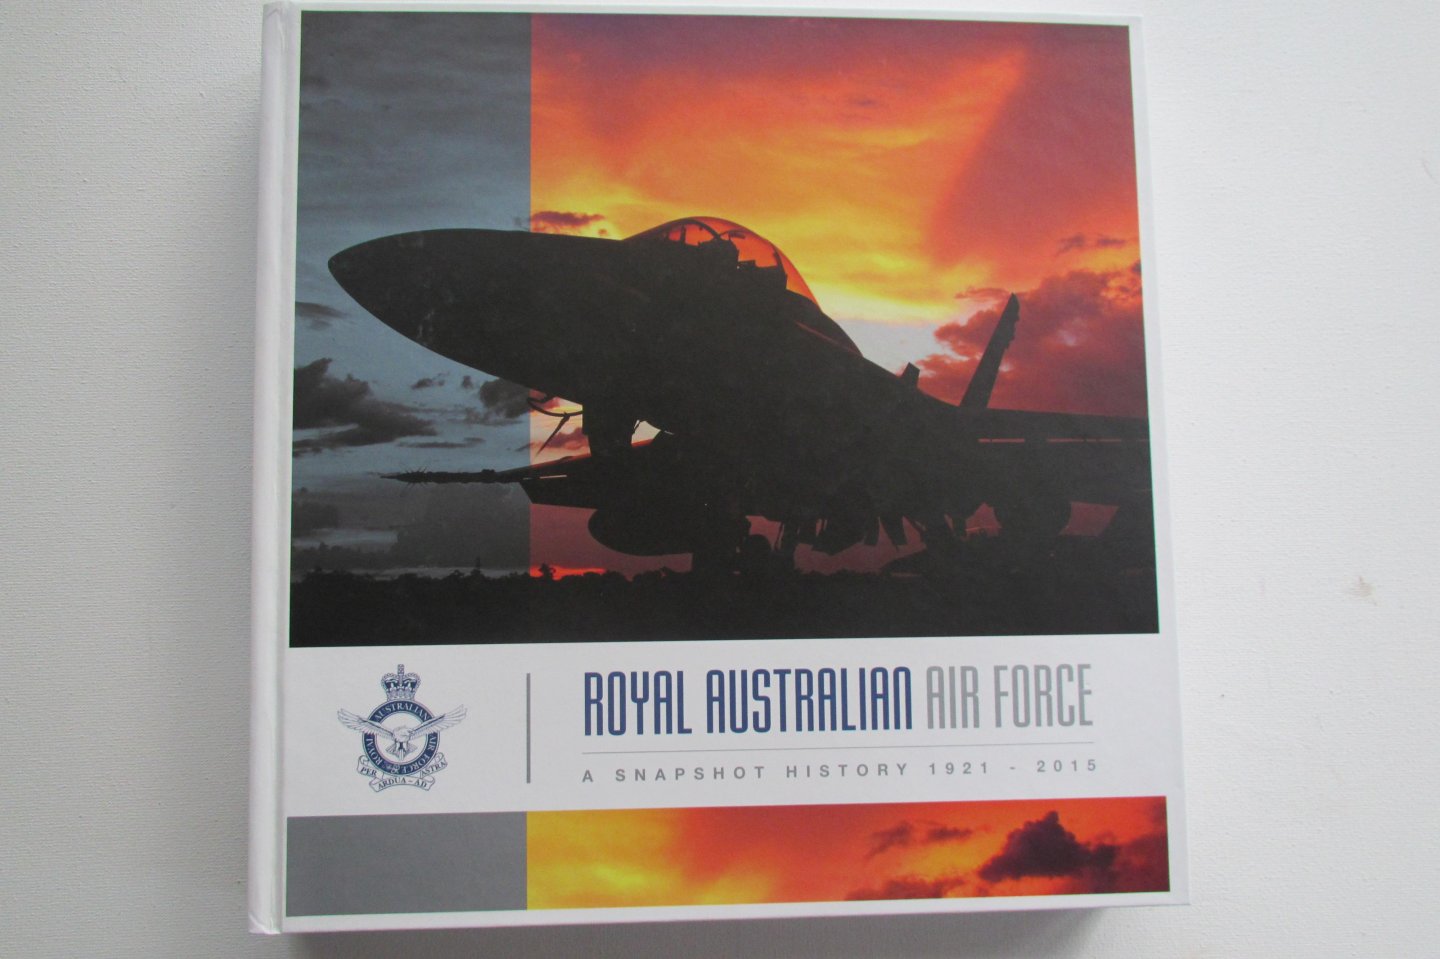 Gibbons, Owen - Royal Australian Air Force - a snapshot history 1921 - 2015